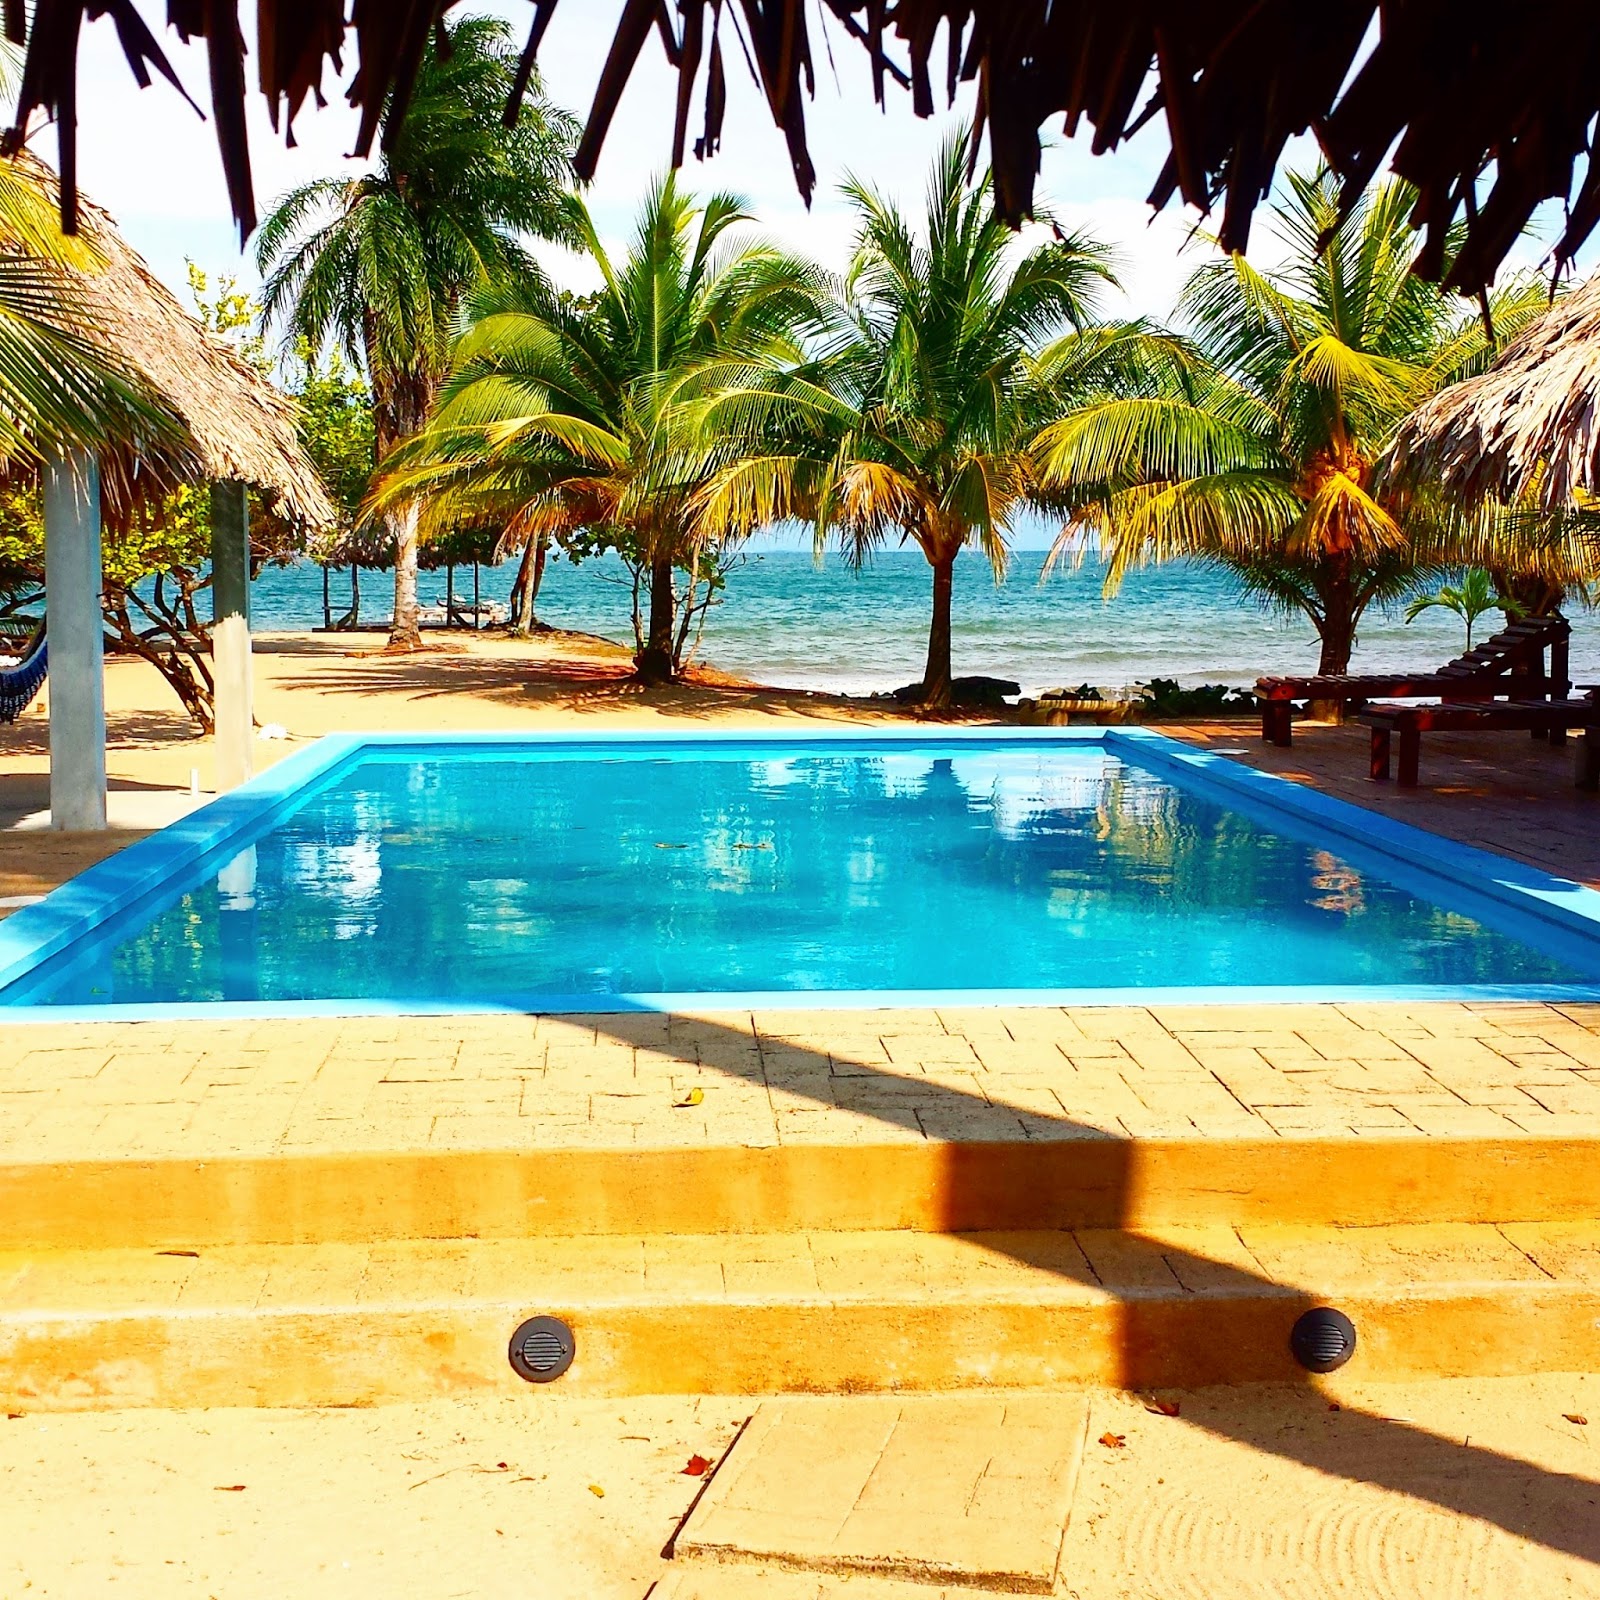 Remax Vip Belize: Light House Resort Pool